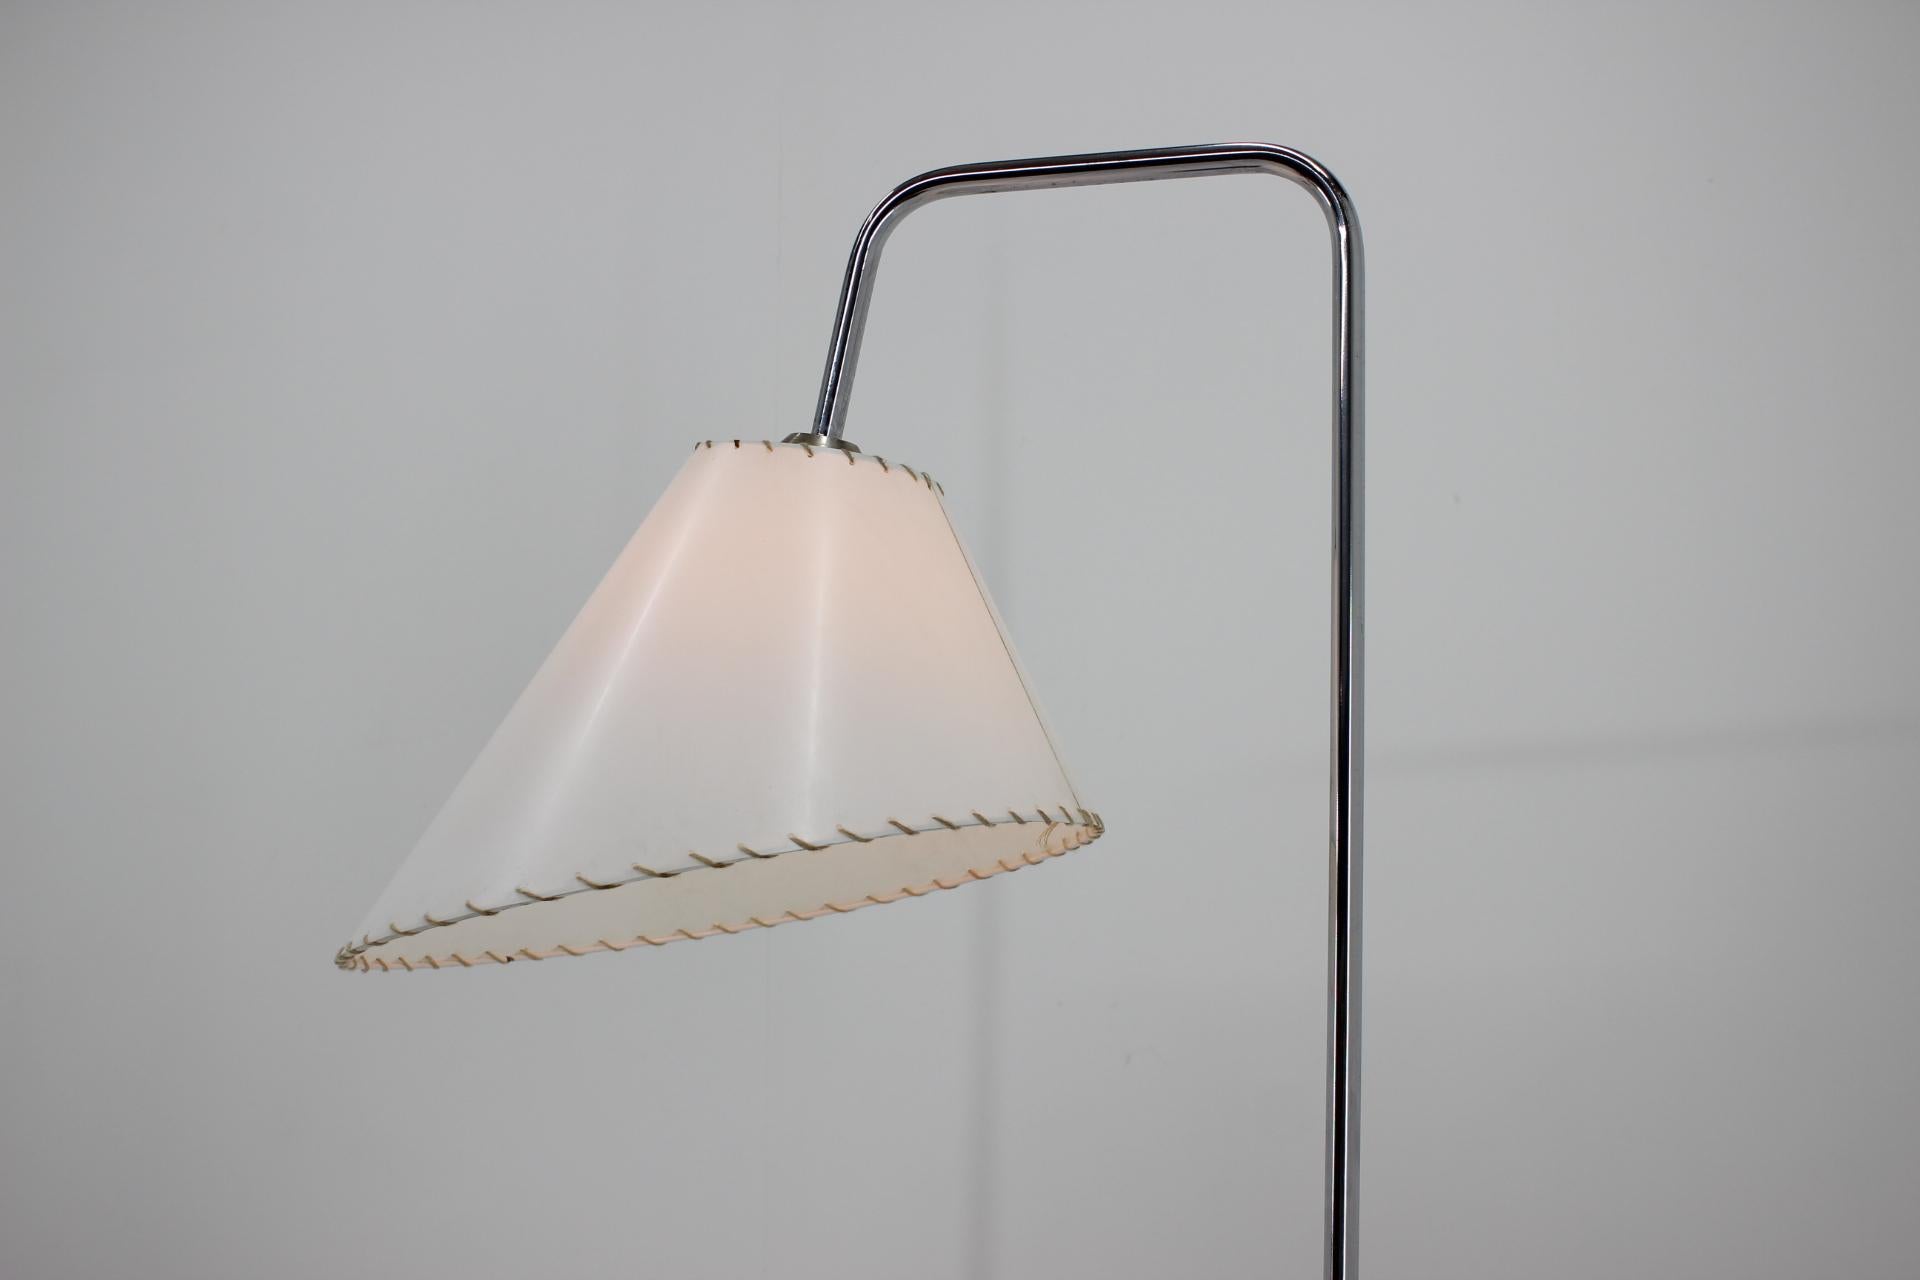 Czech Midcentury Design Floor Lamp, 1960s For Sale